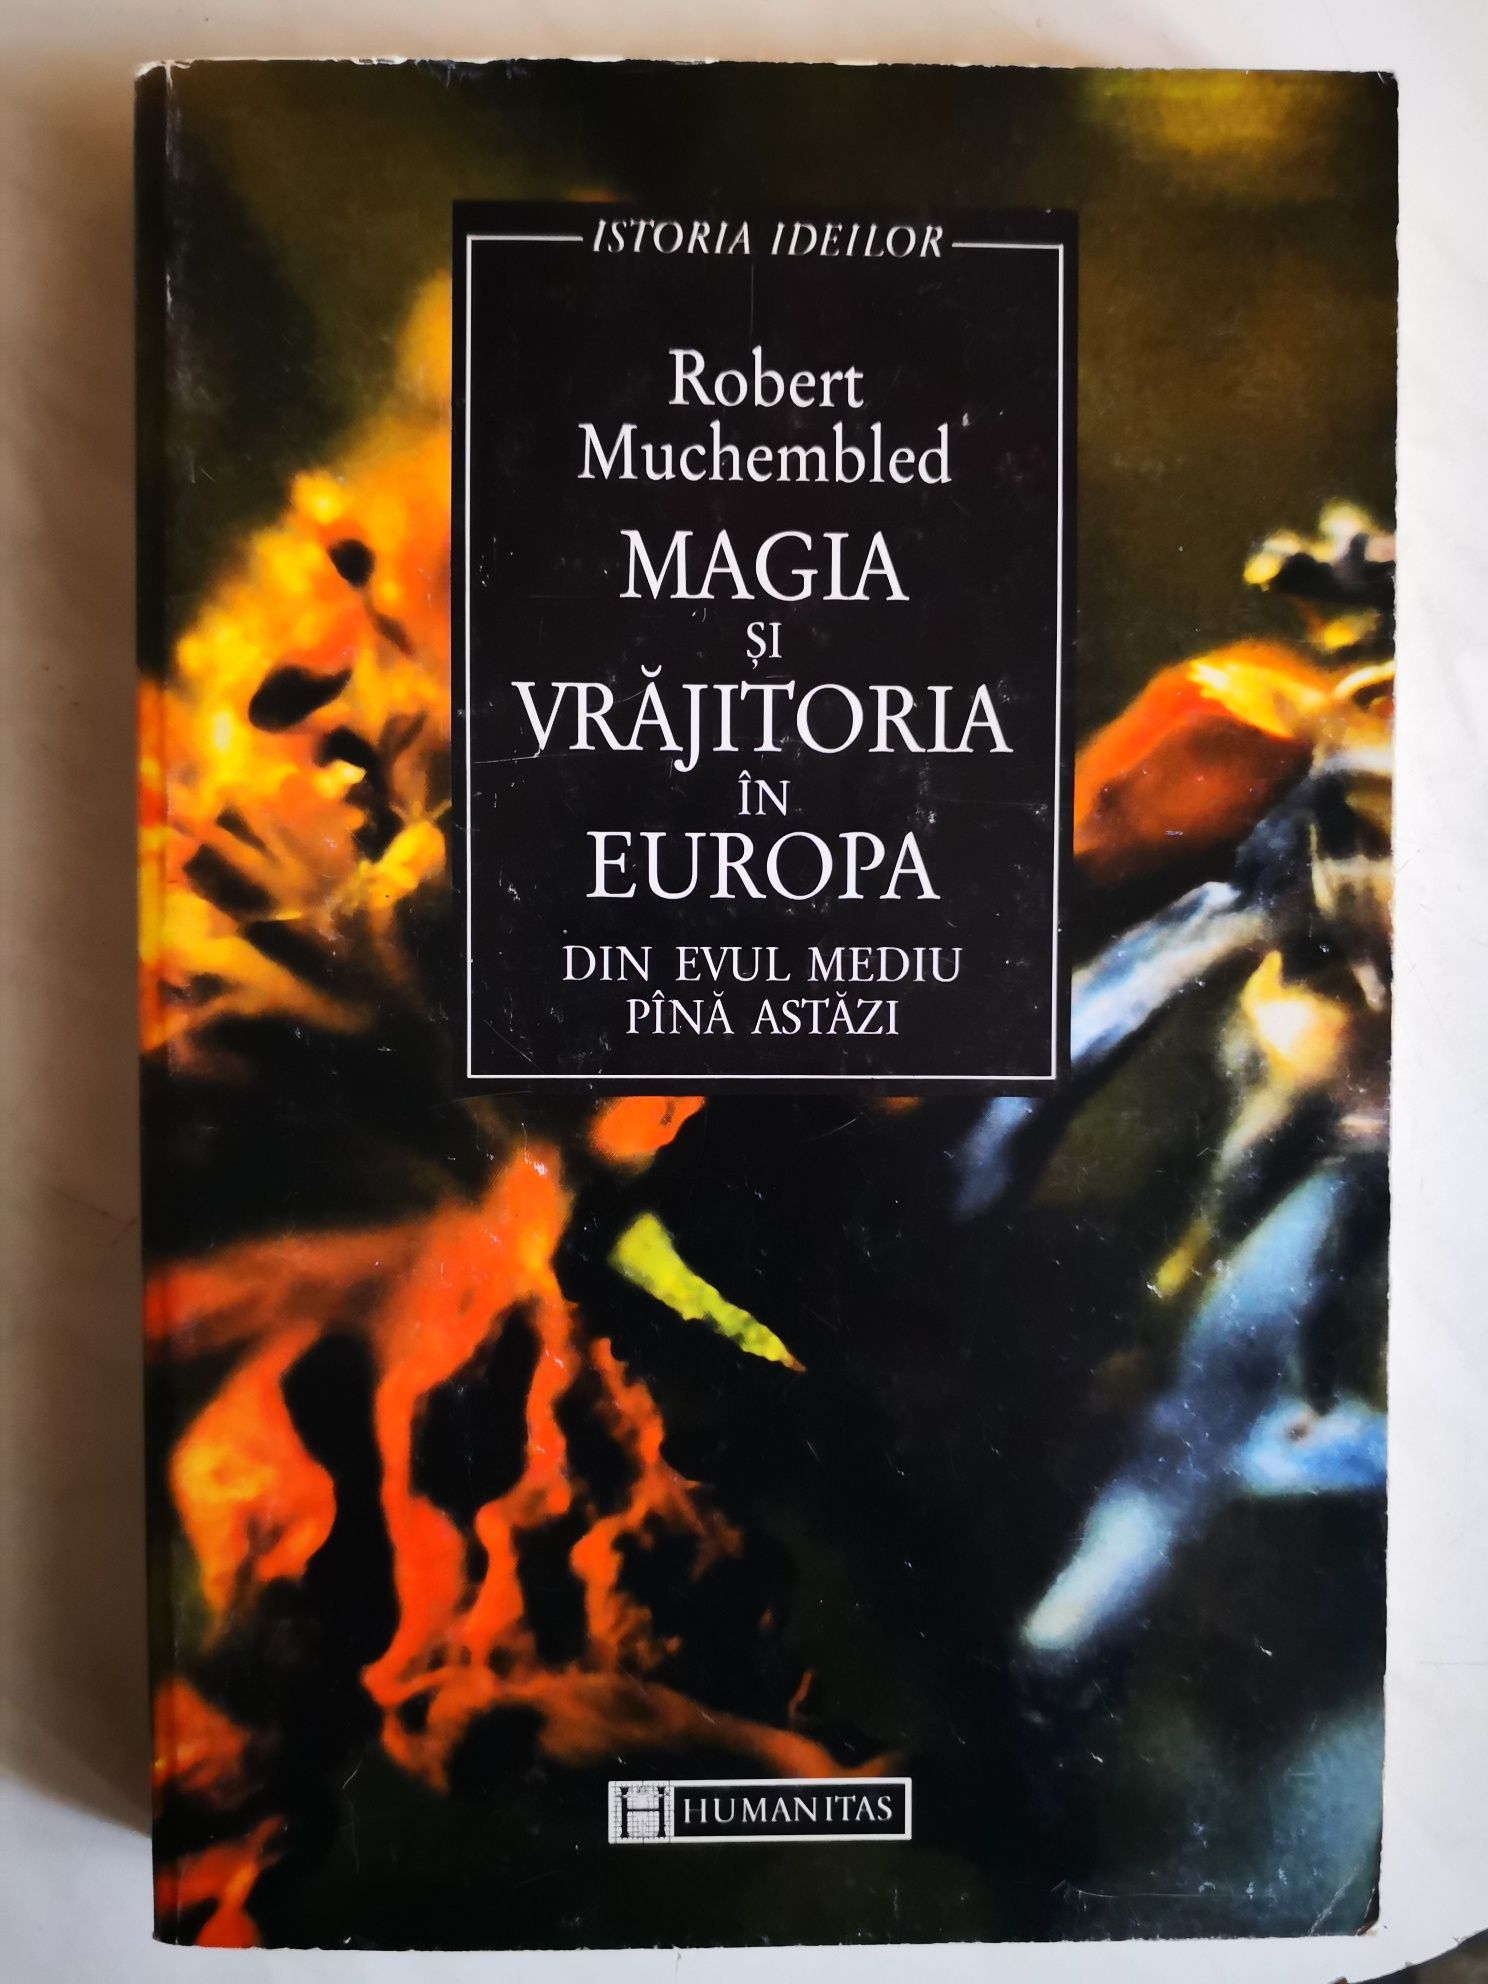 Robert Muchembled Magia și Vrăjitoria in Europa, istorie, Humanitas